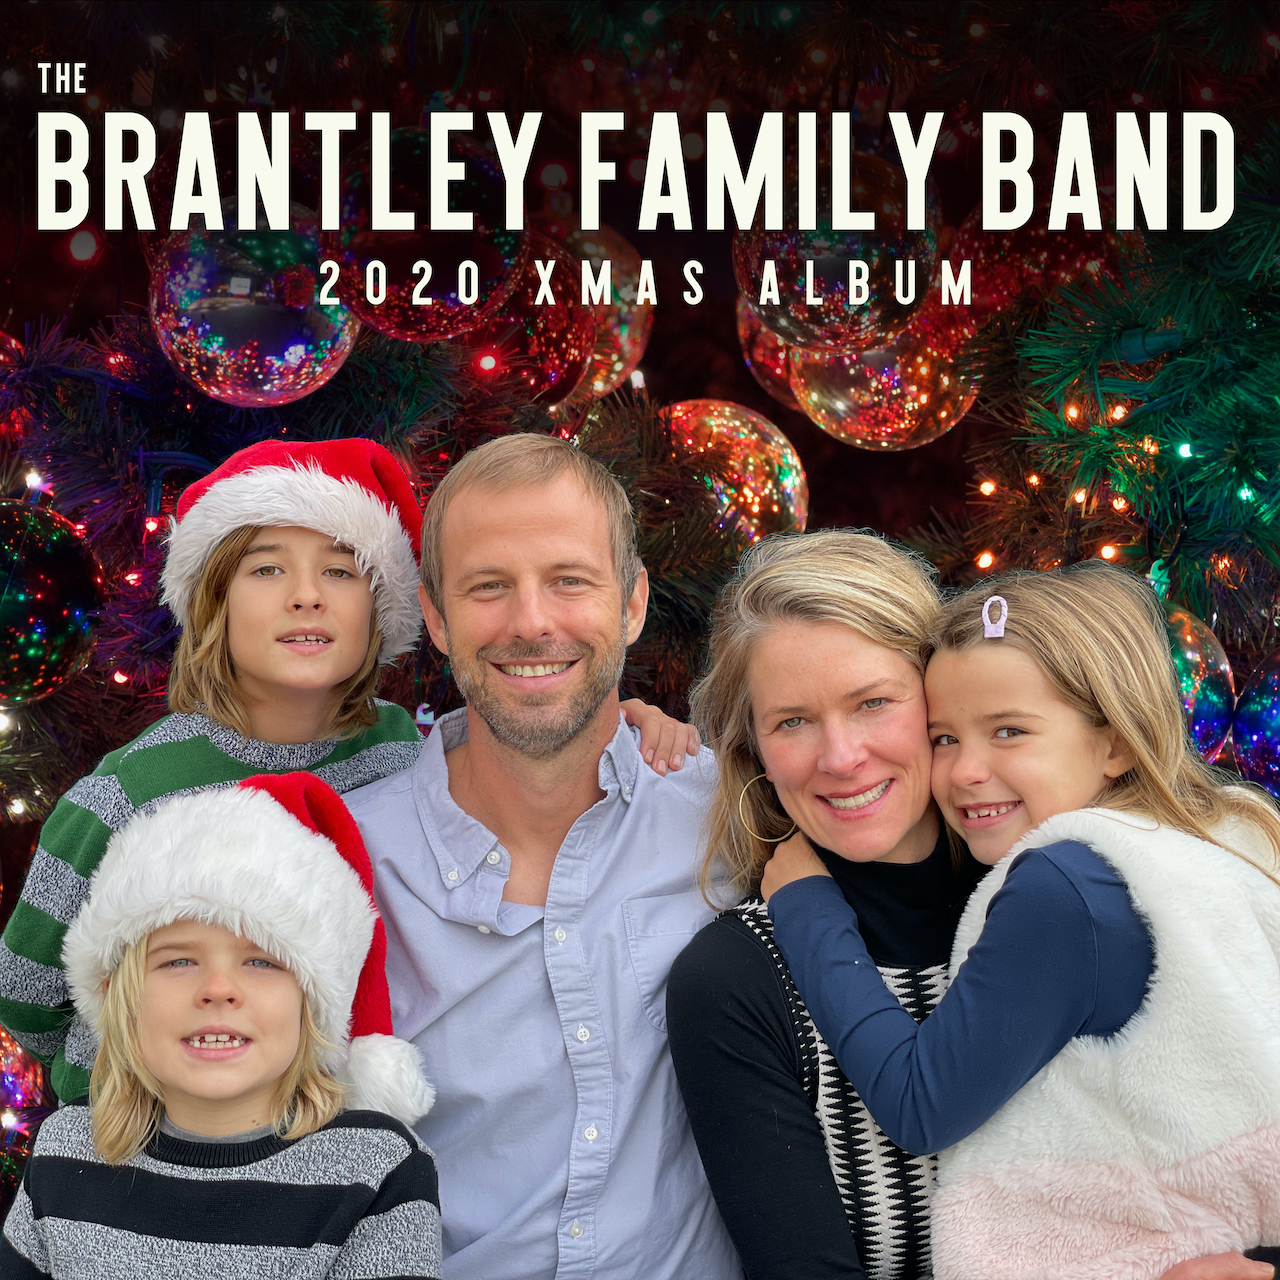 The Brantley Family Band 2020 Xmas Album